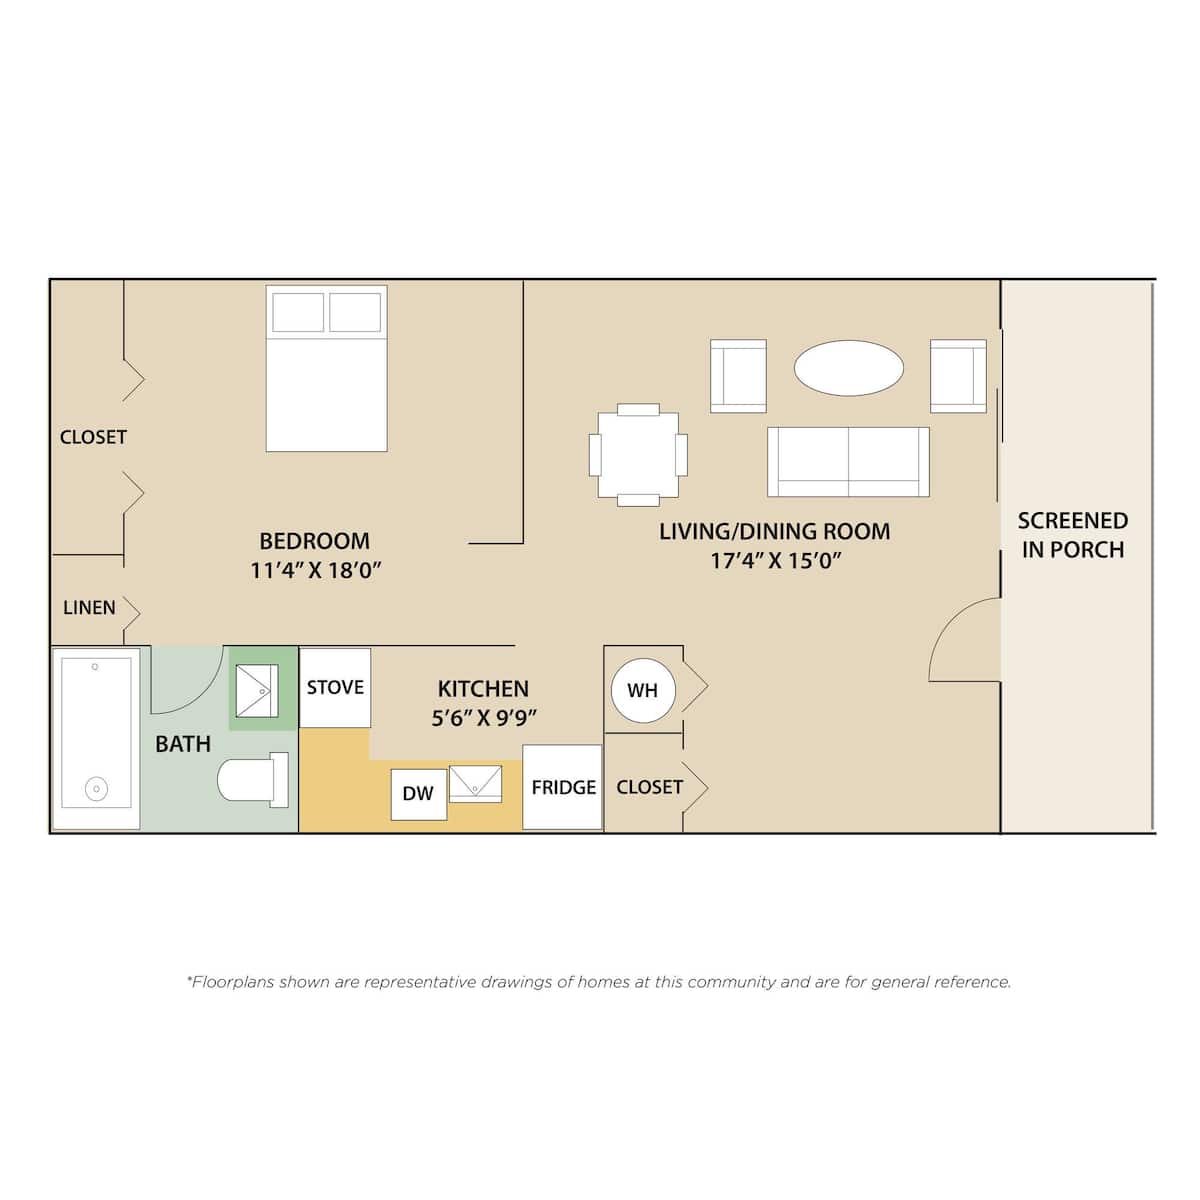 Floorplan diagram for Biagio, showing 1 bedroom